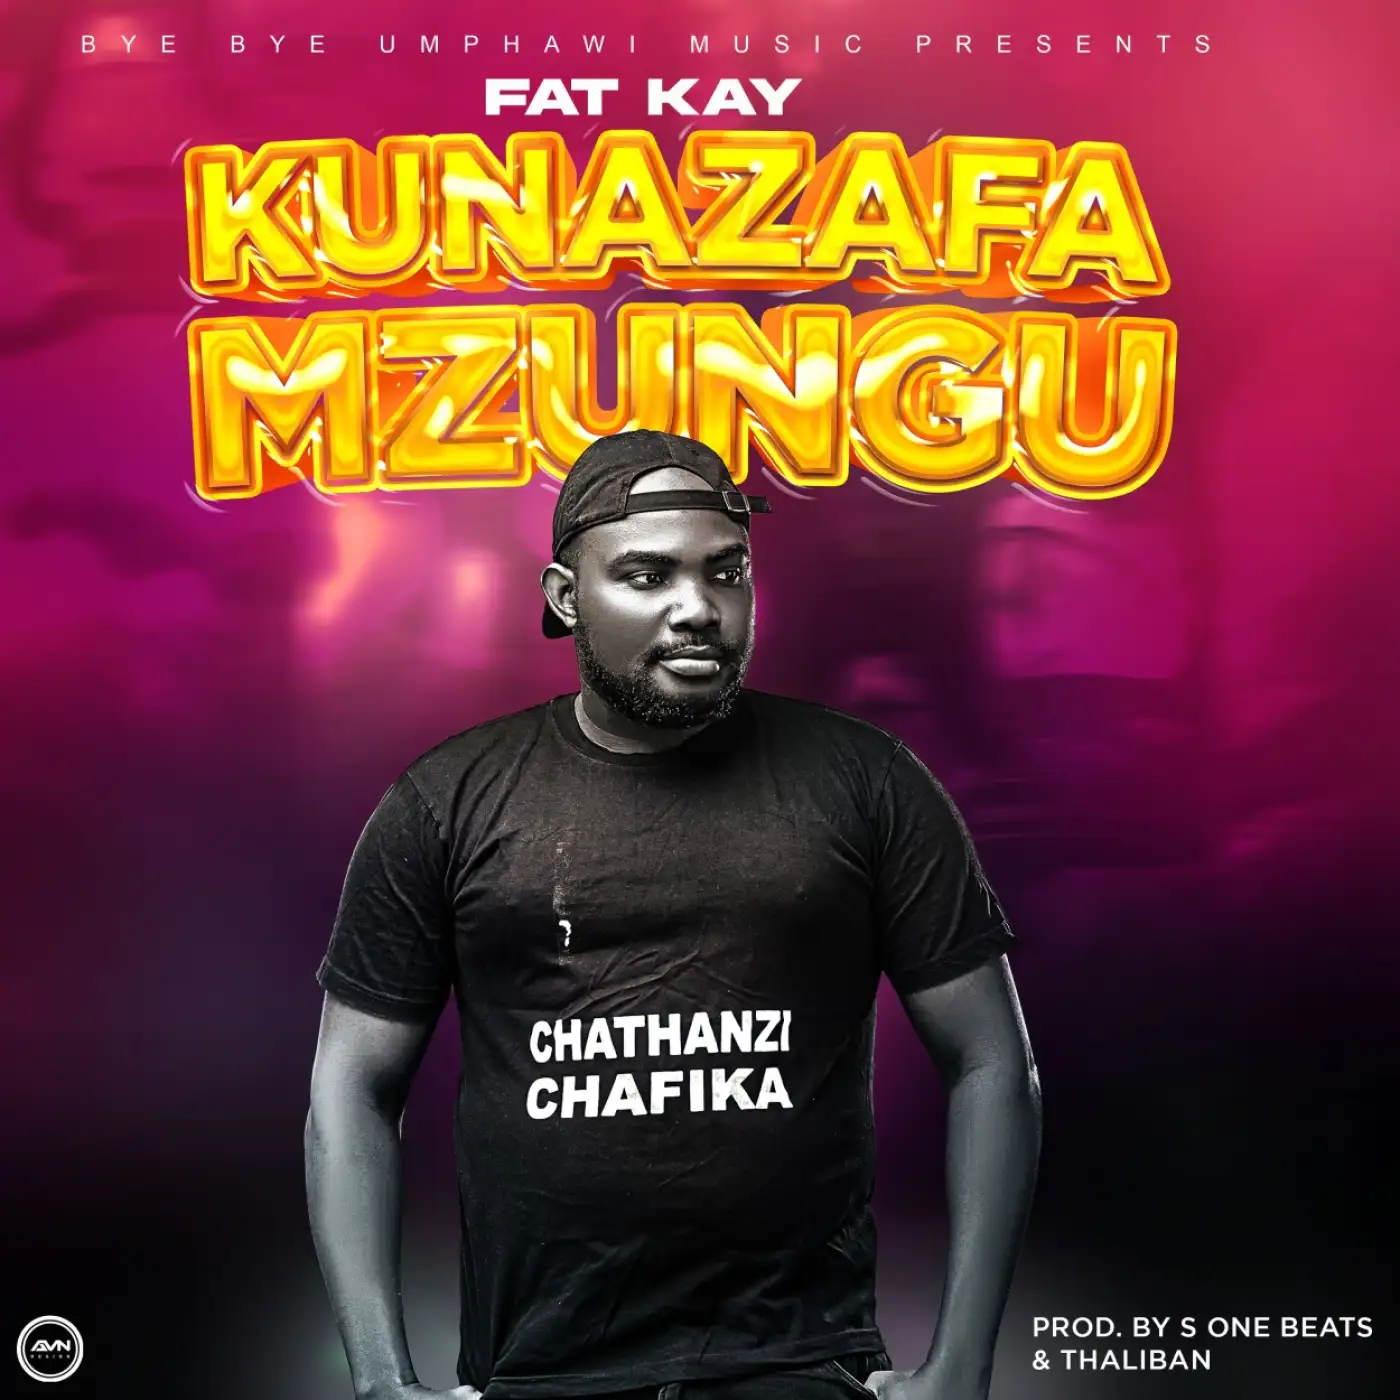 Fat Kay-Fat Kay - Kunazafa Mzungu (Prod. S.One Beats & Taliban)-song artwork cover